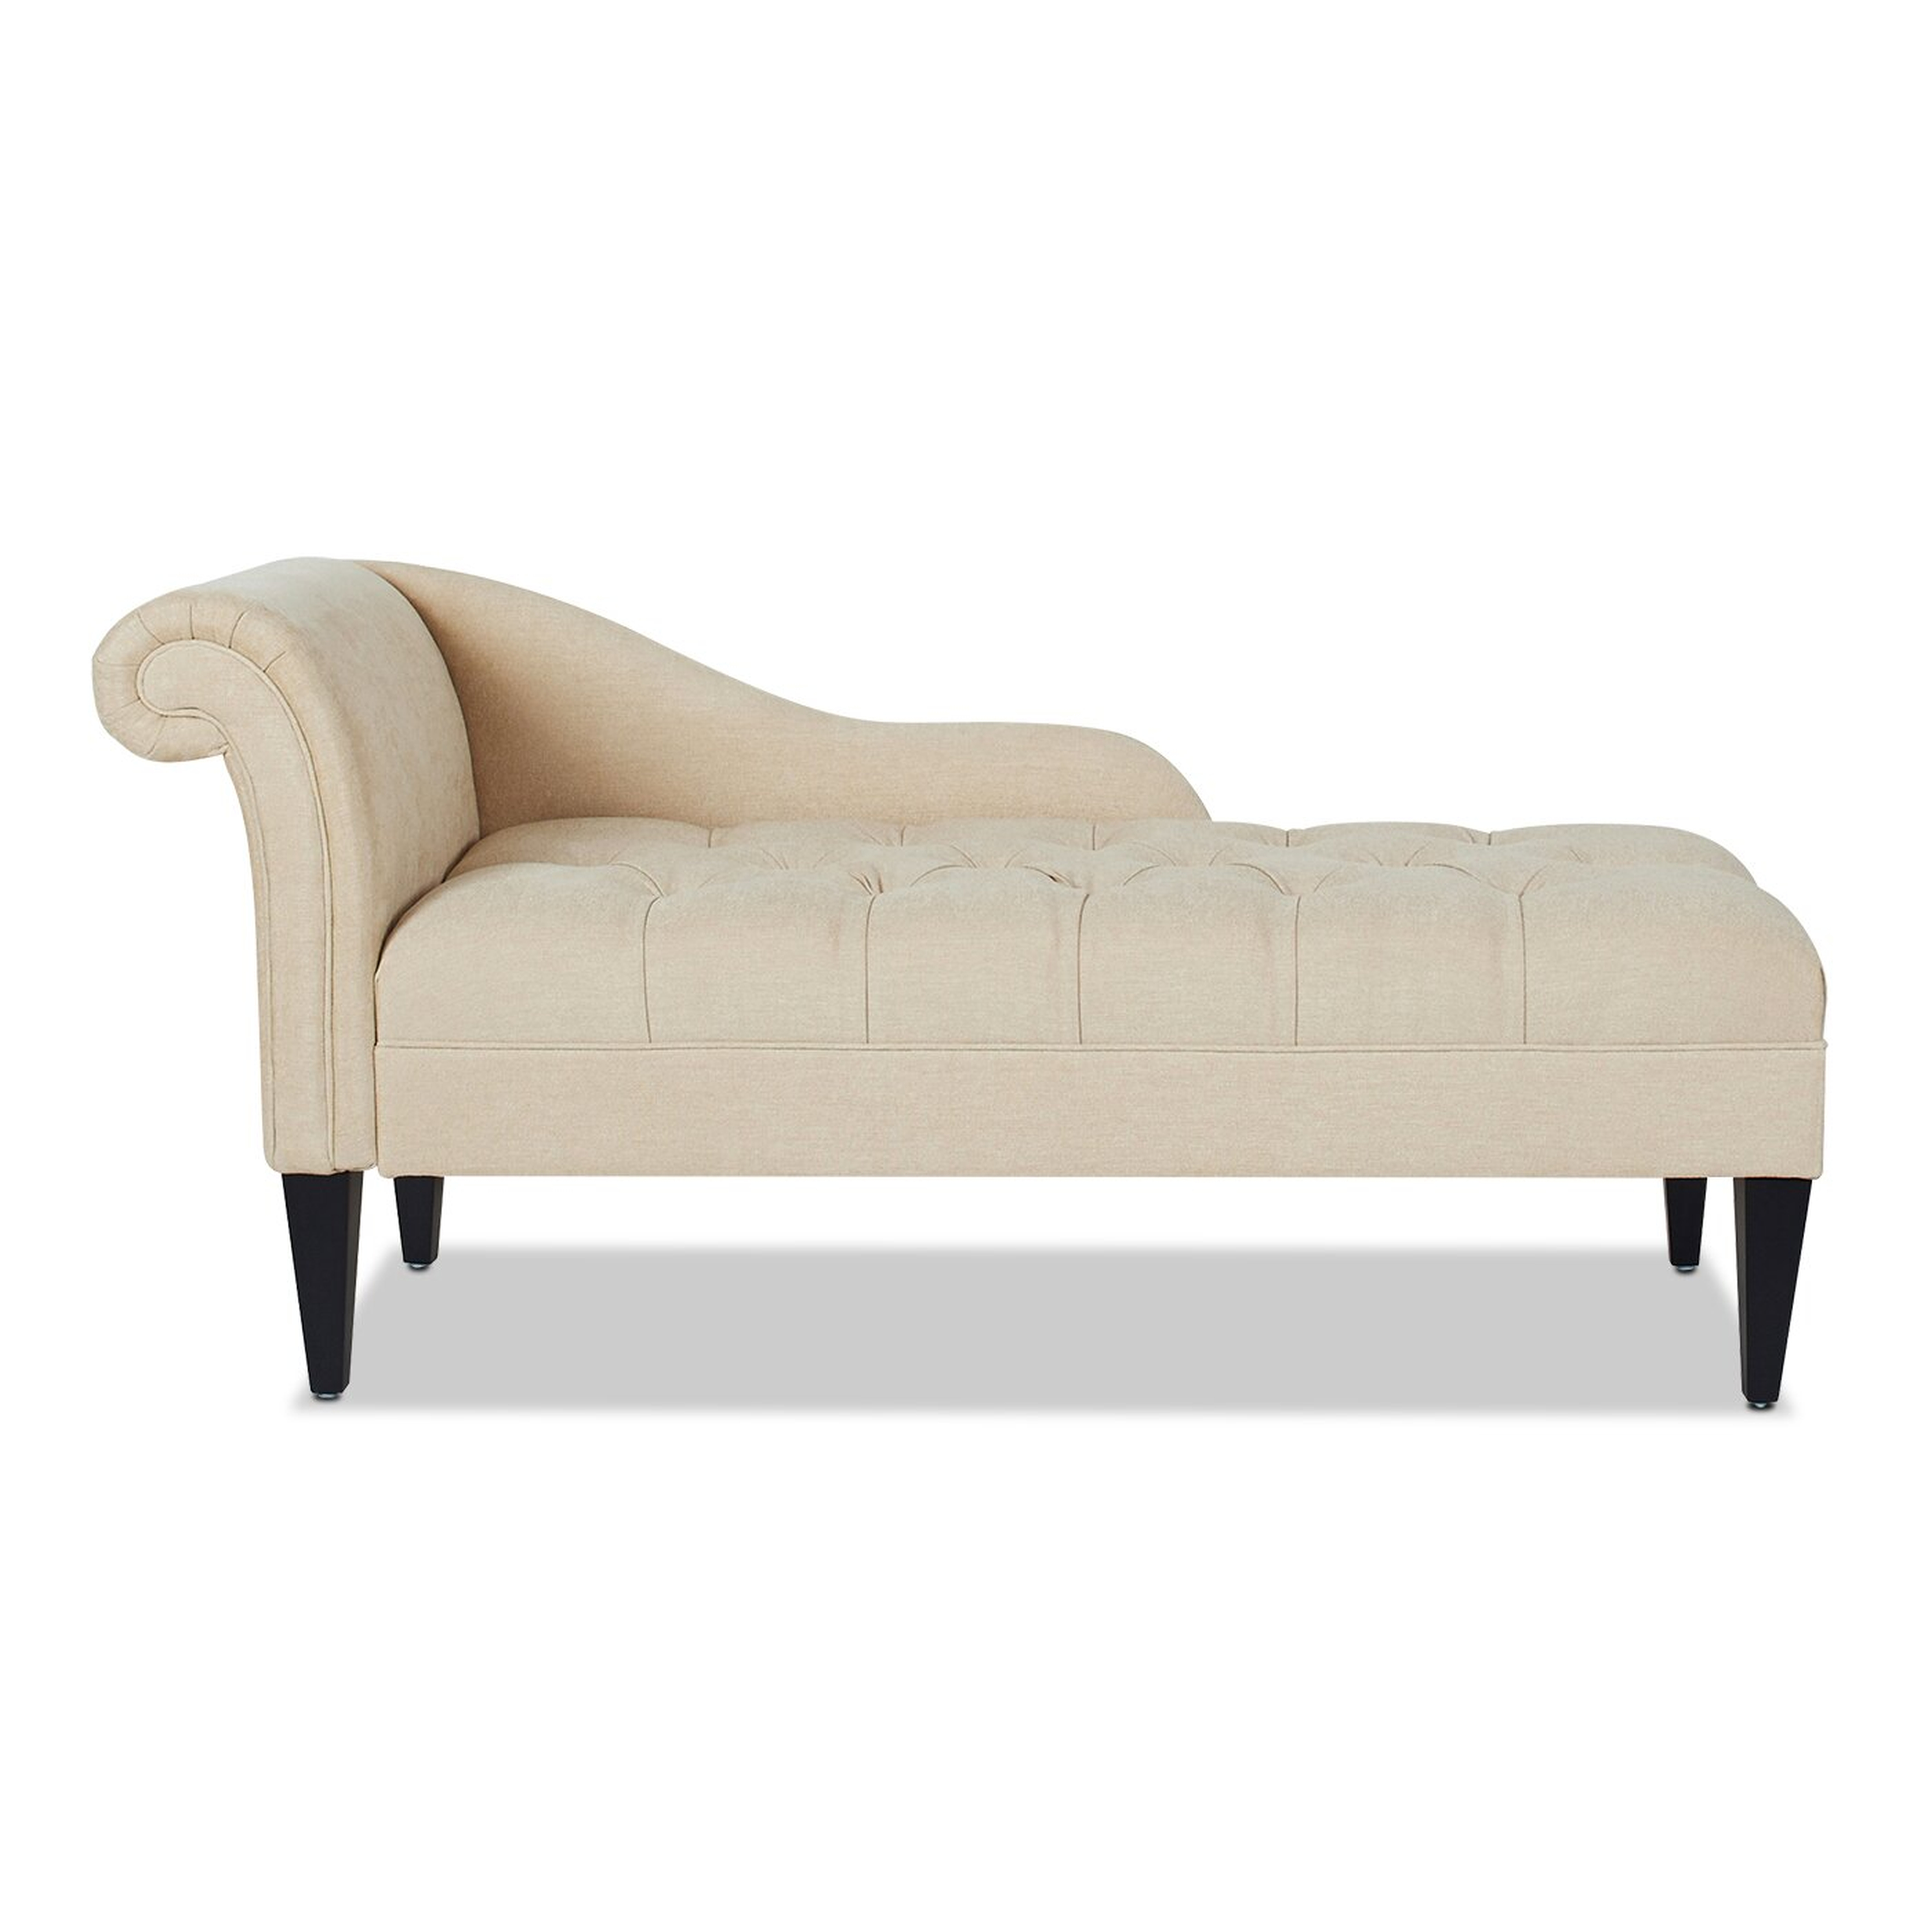 Ainara Upholstered Chaise Lounge - Wayfair